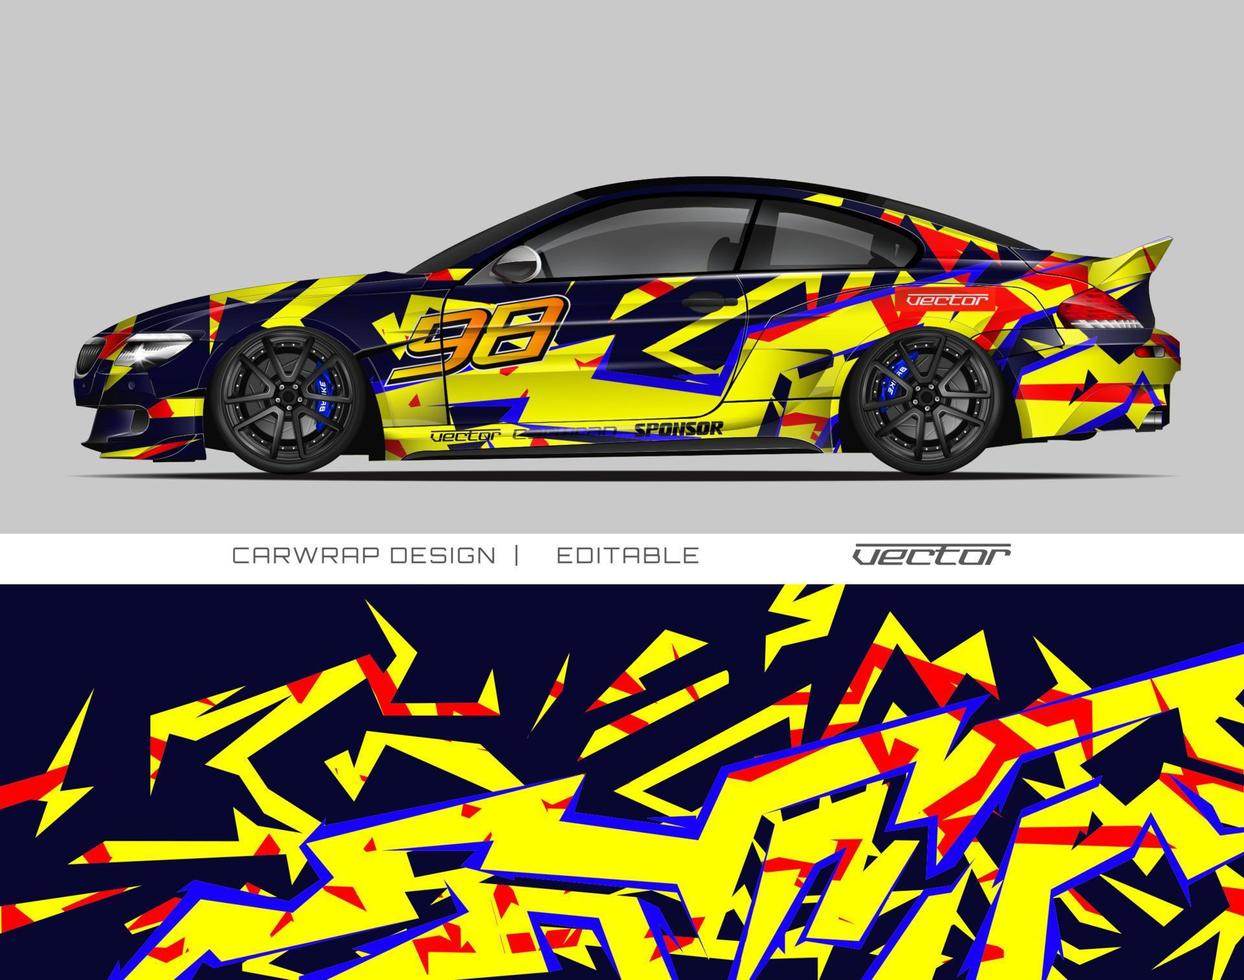 Car wrap design modern racing background design for vehicle wrap, racing car, rally, etc vector